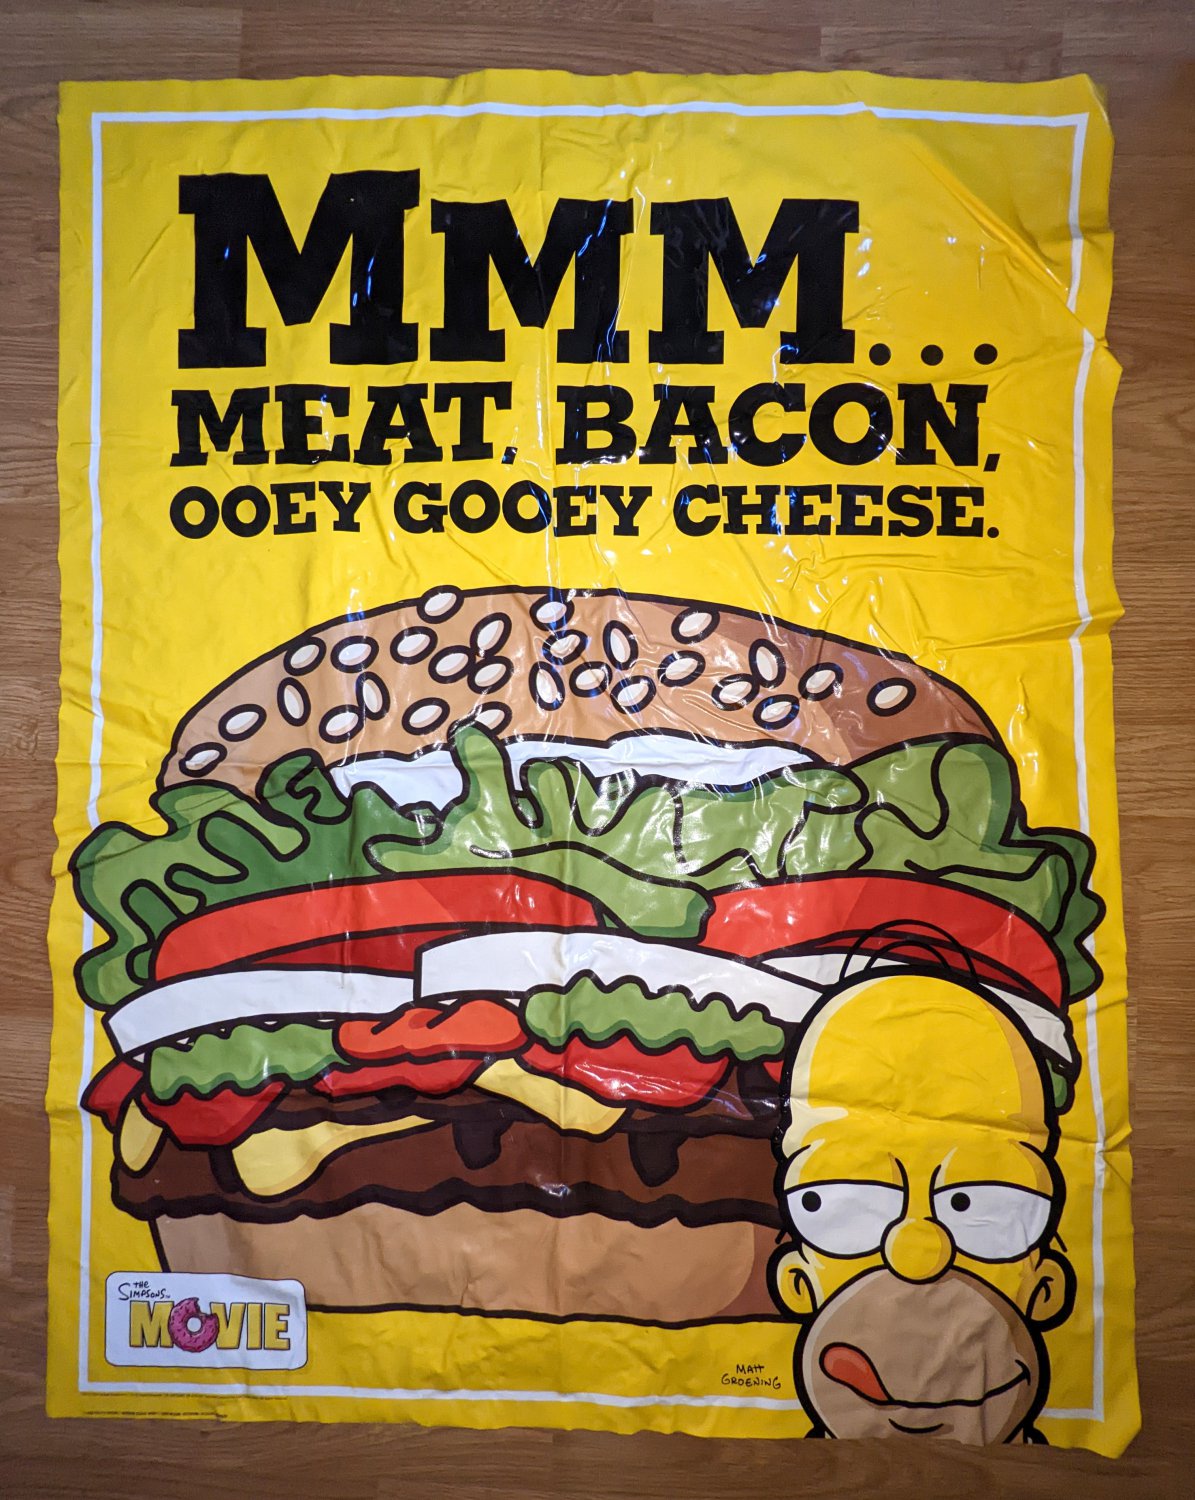 The Simpsons Movie Burger King Kids Meal Toys Promo Signs Vinyl Window Clings 2007 Homer Bart Lisa